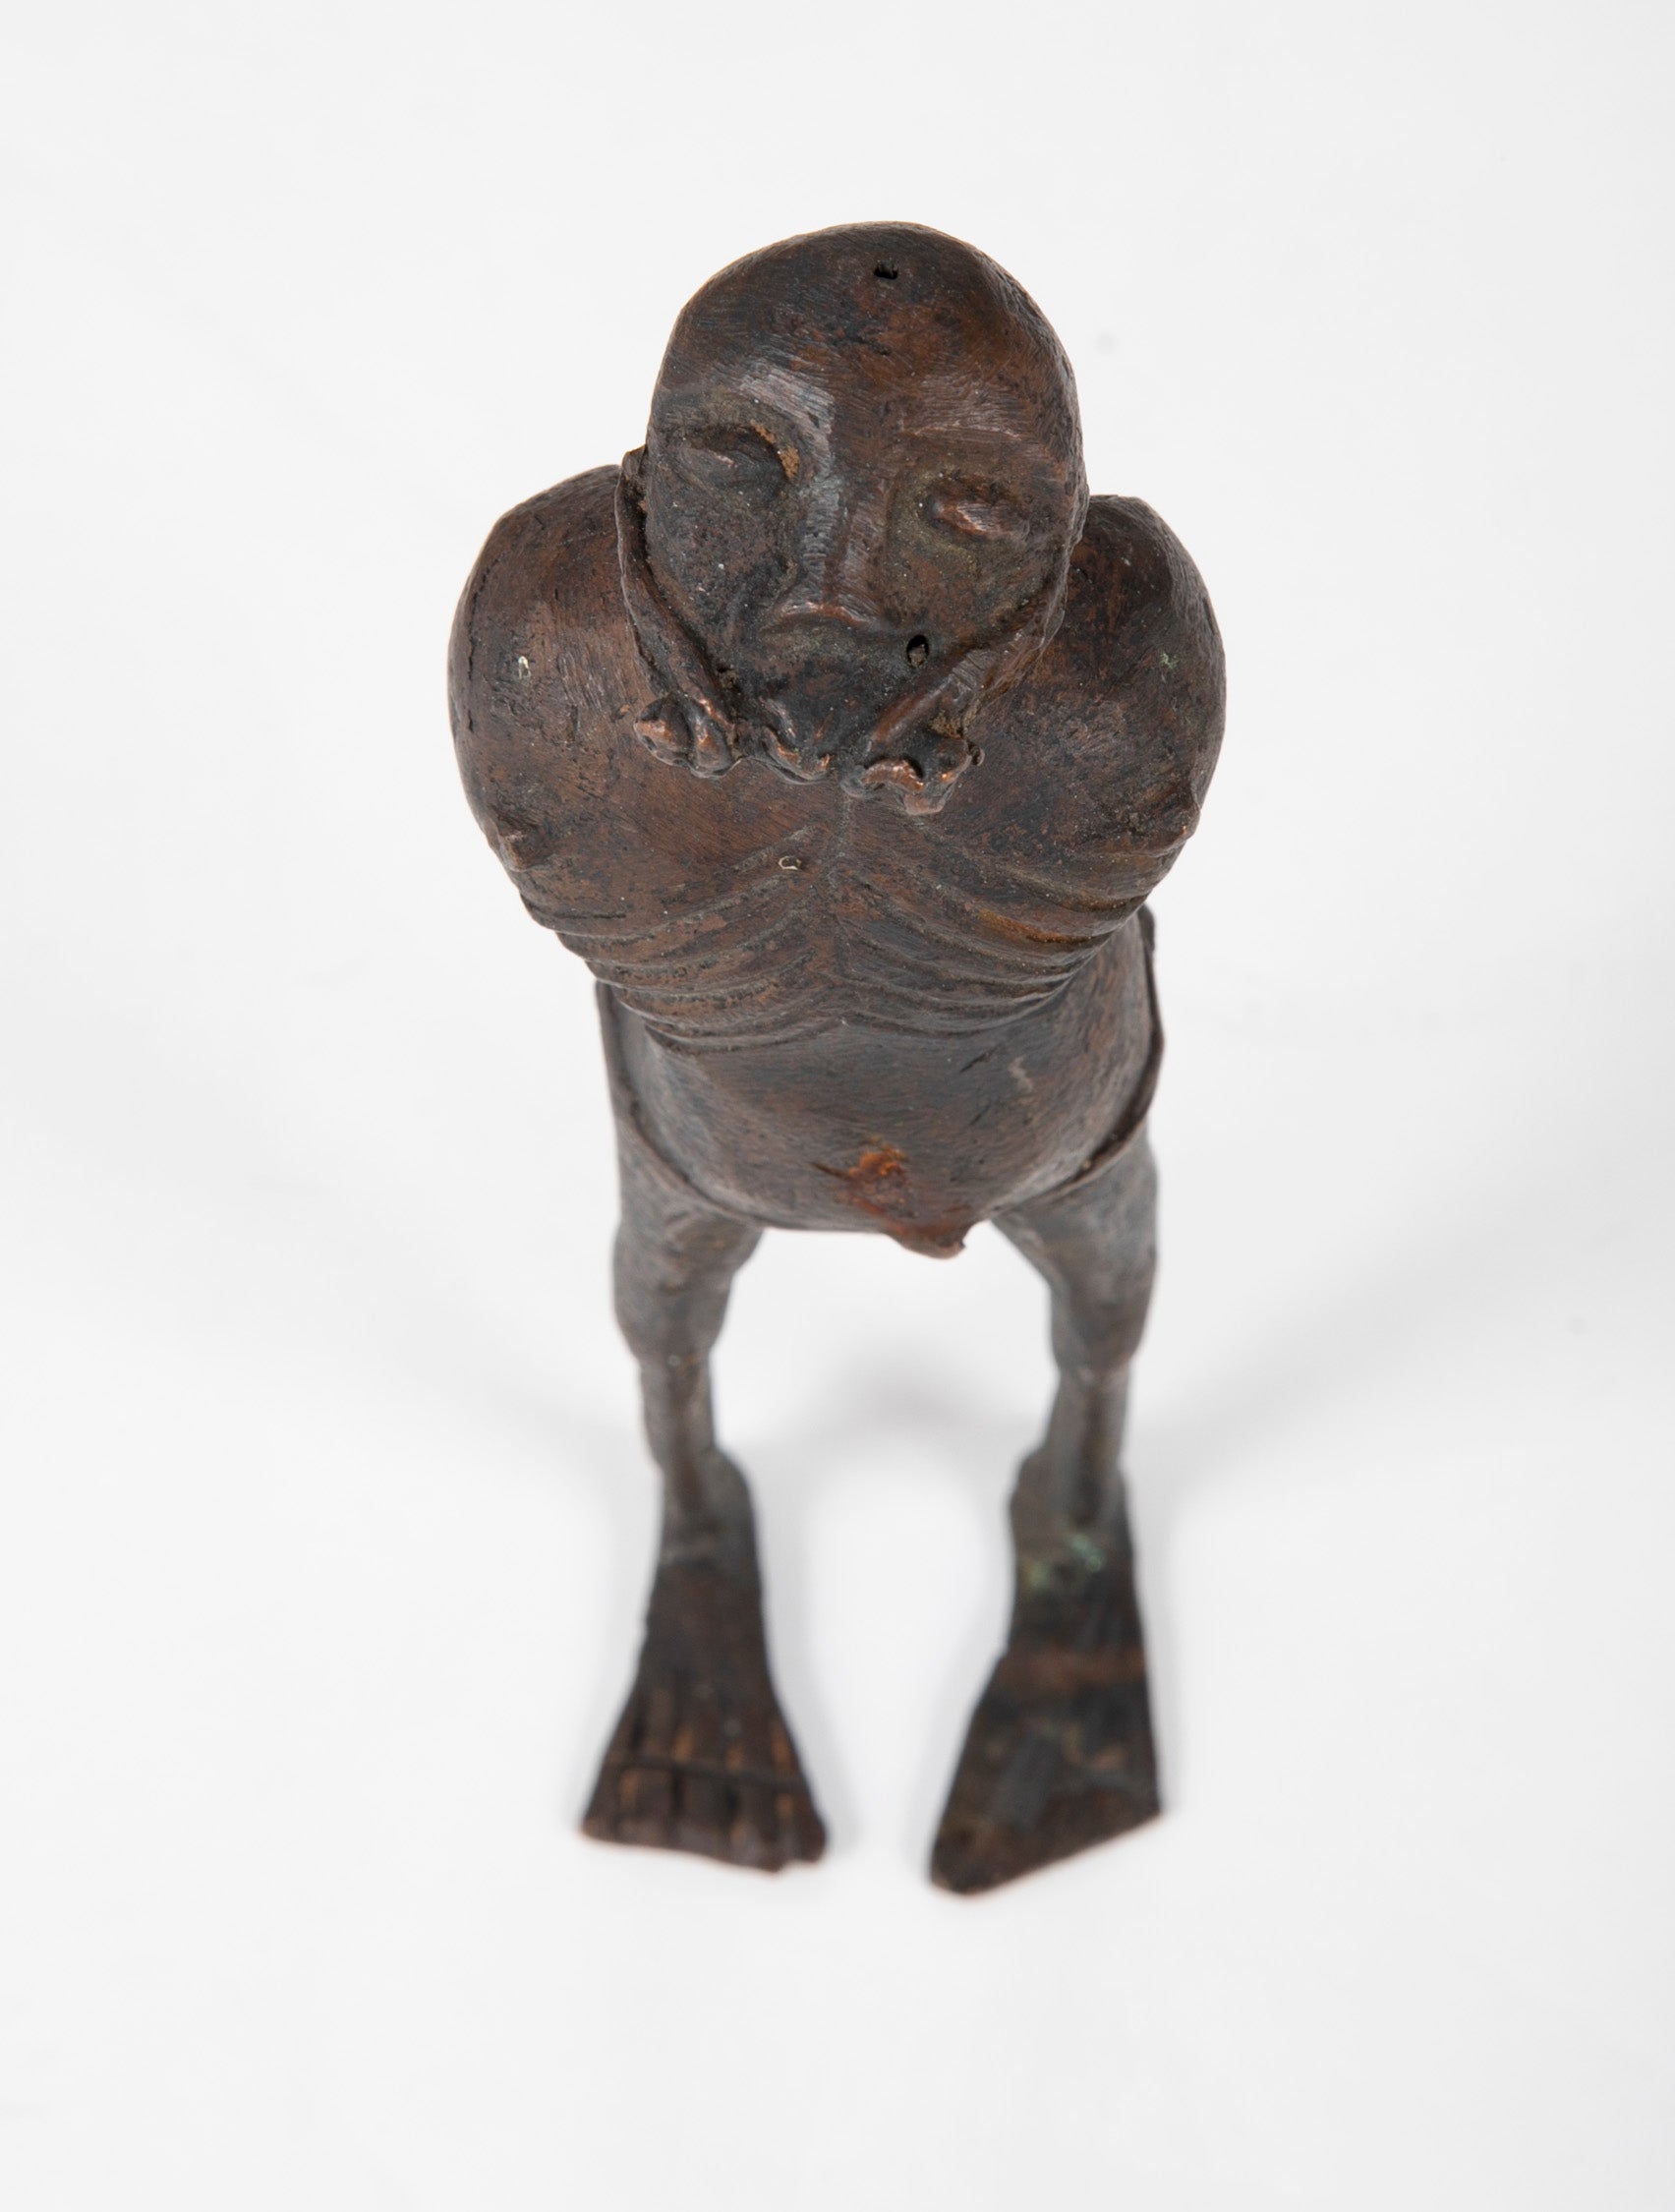 Fon Bronze Used In Religious Vodoo Ceremonies